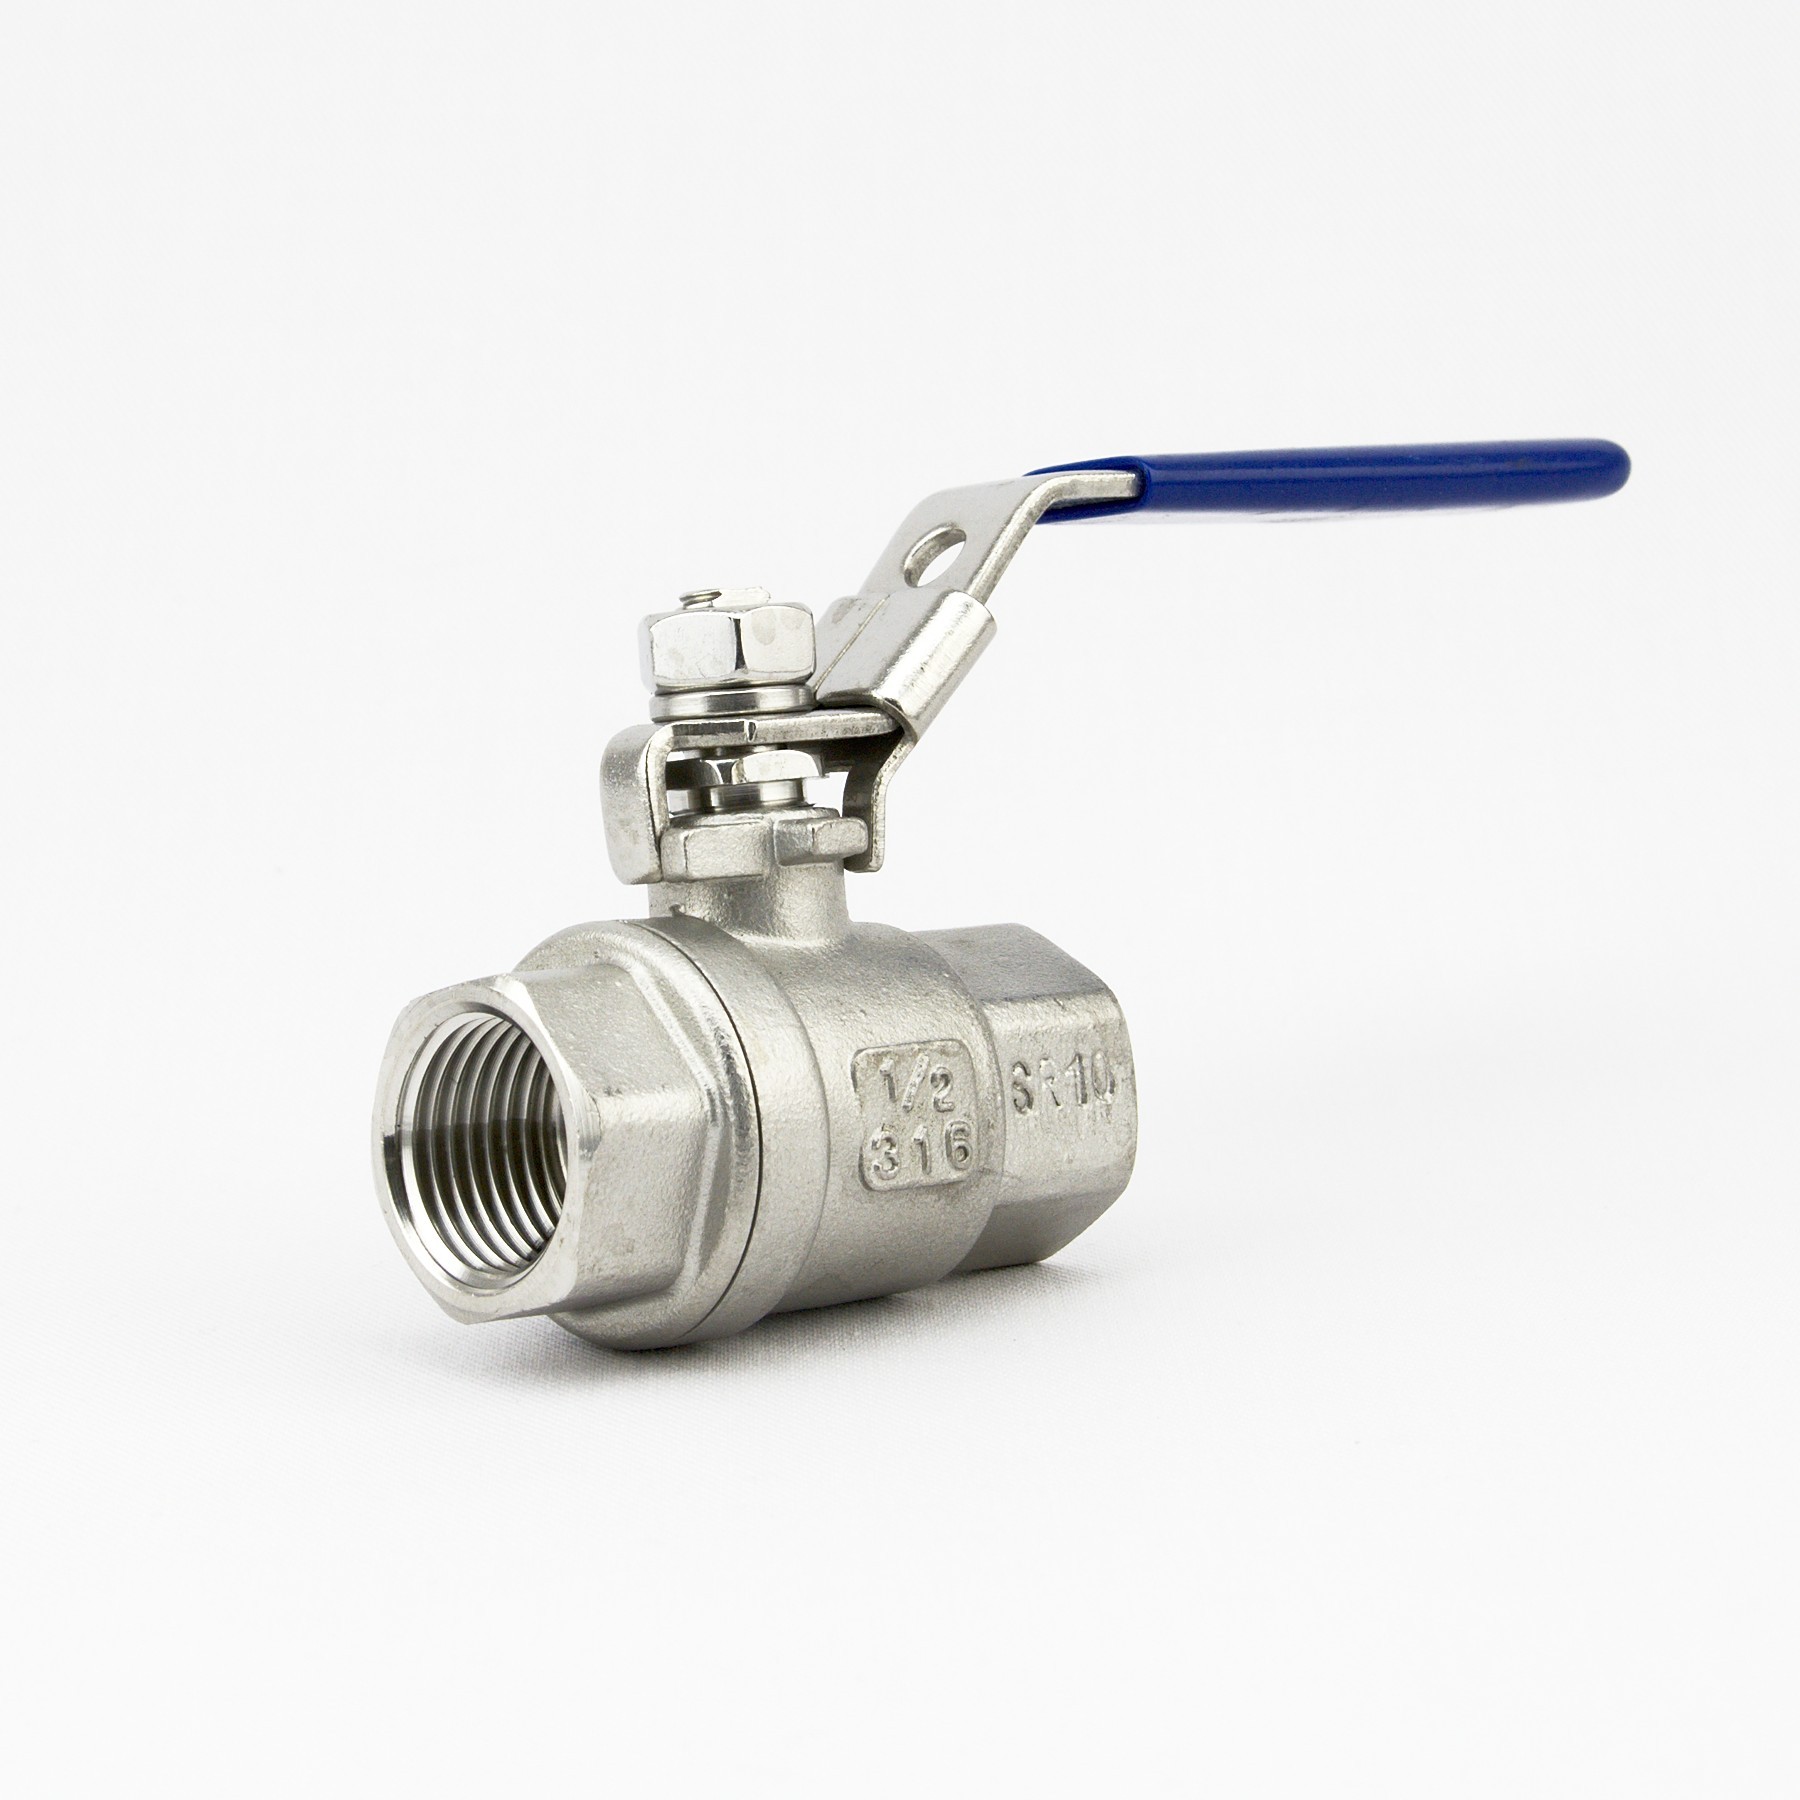 2-piece full bore ball valve with locking handle (1/2" BSP) - Valves